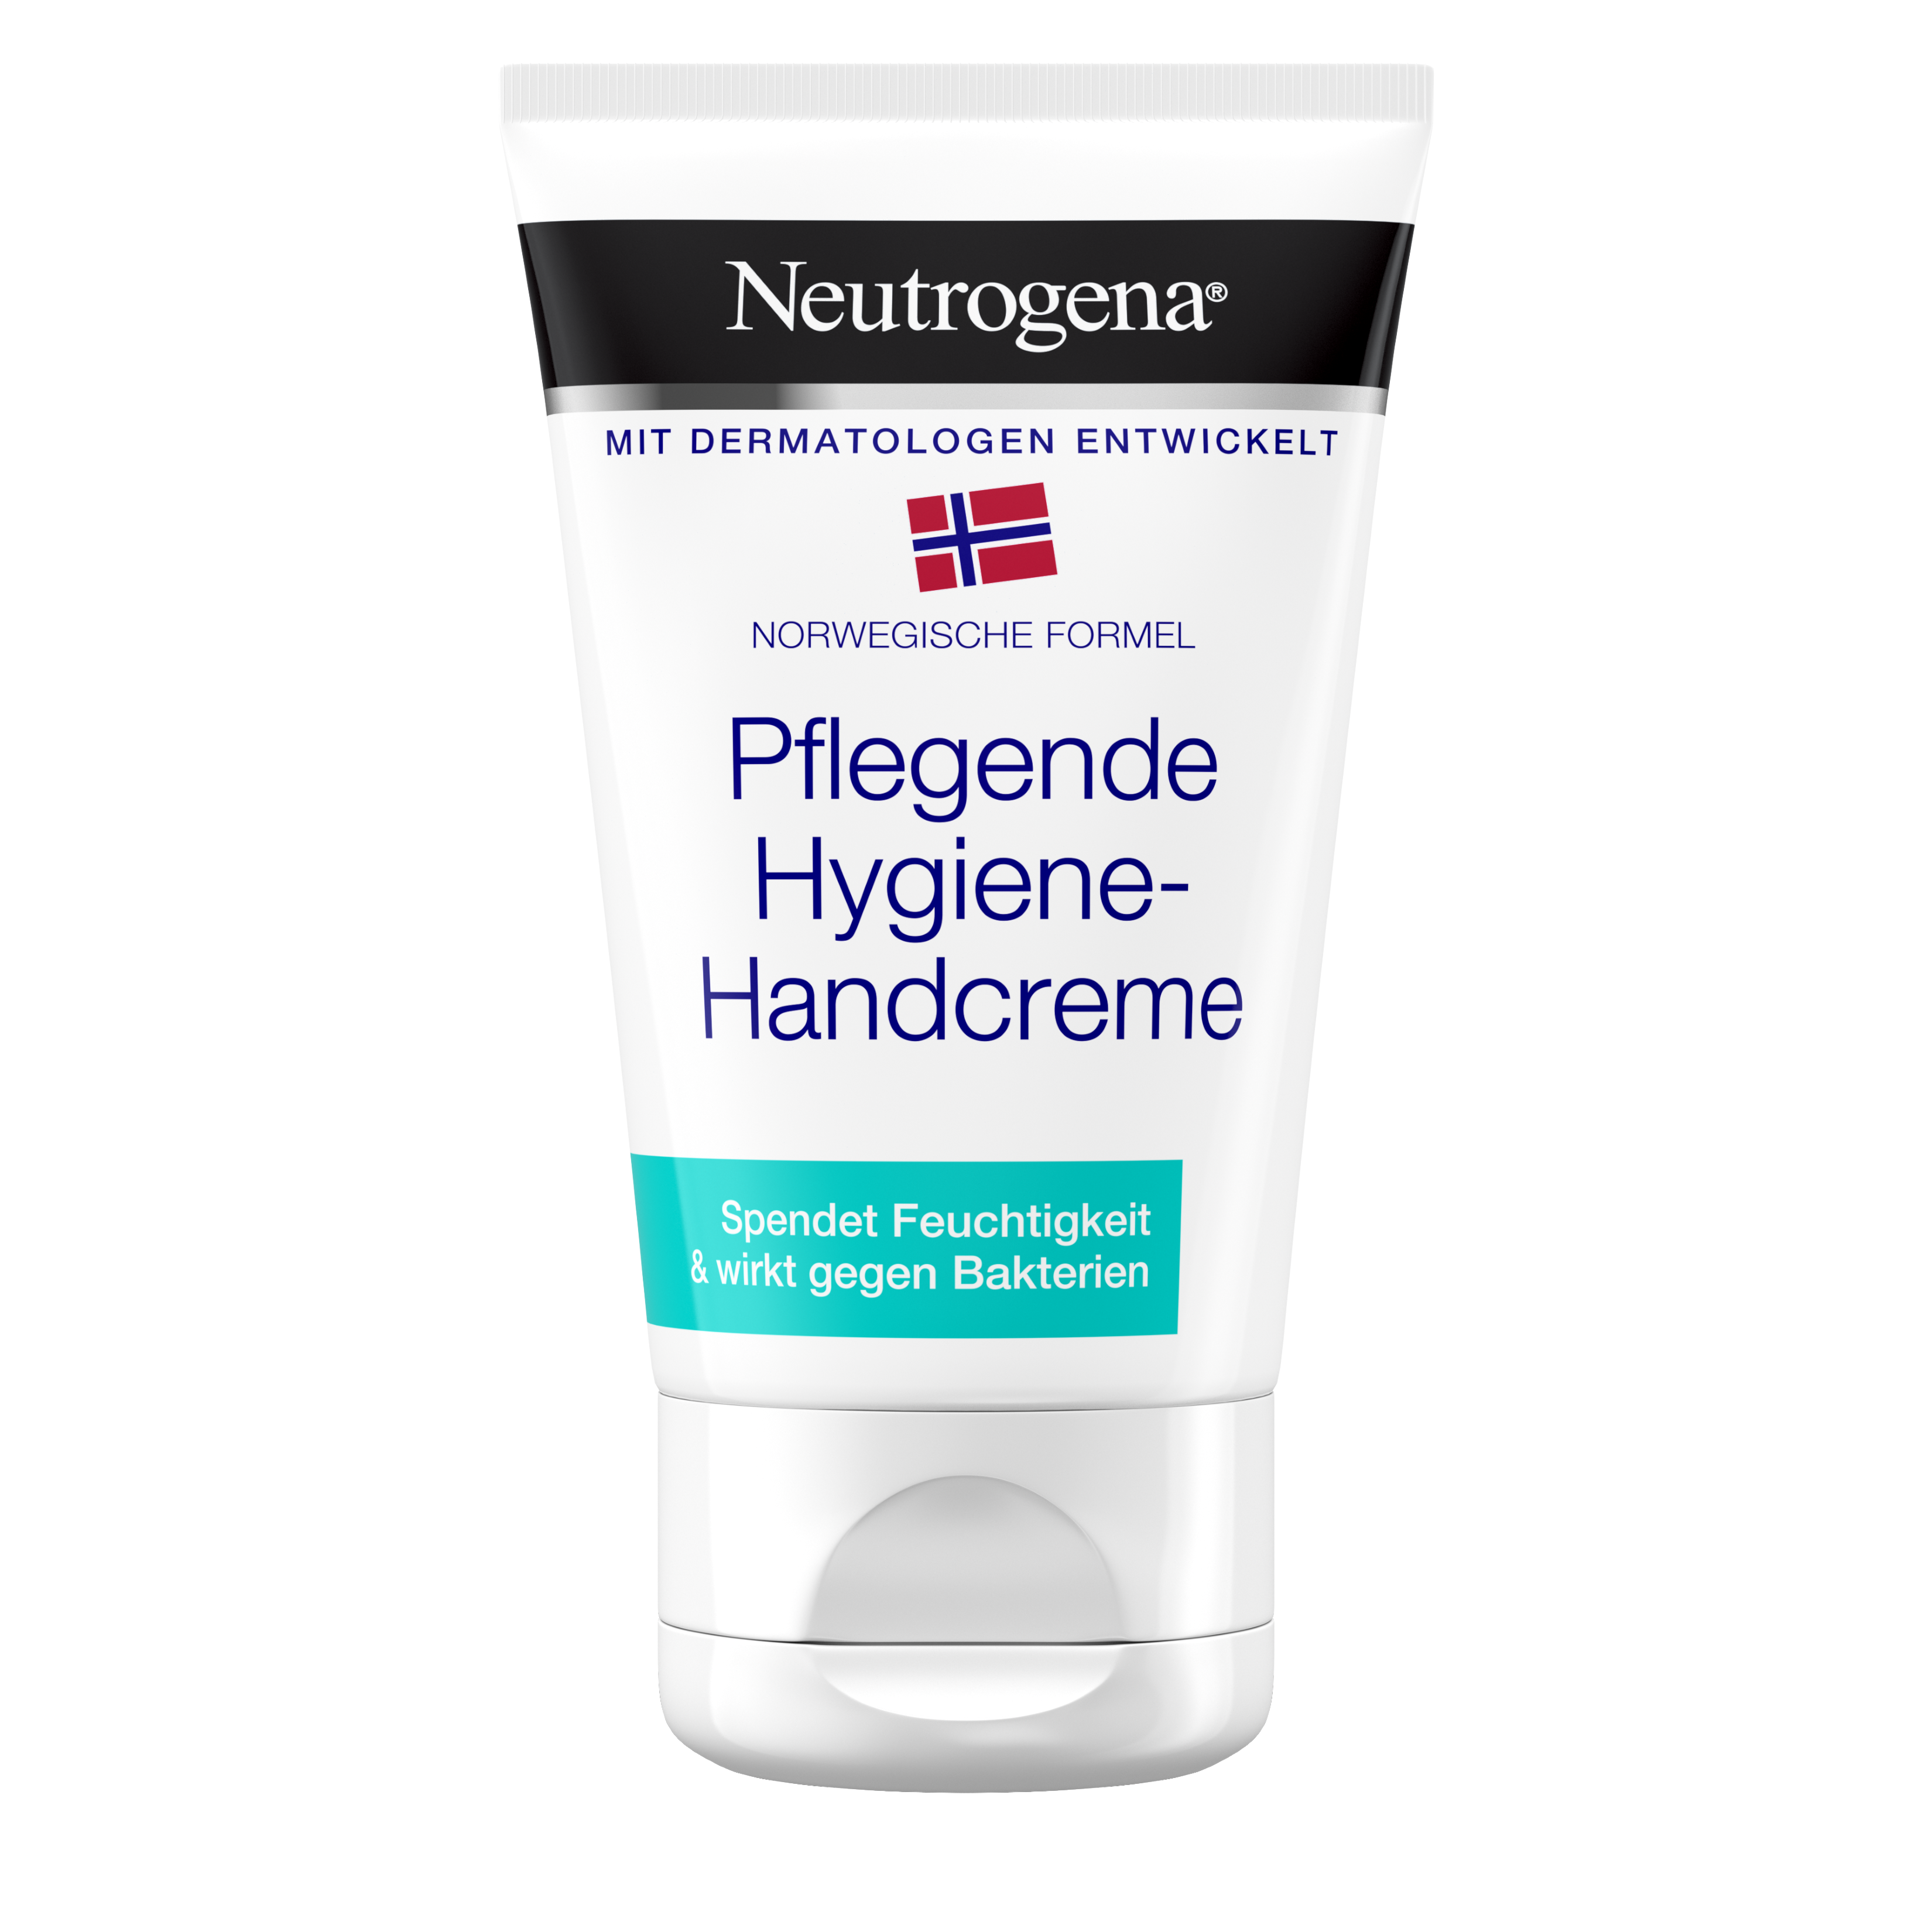 Neutrogena® Norwegische Formel Pflegende Hygiene-Handcreme, 50 ml, UVP* 3,99 €